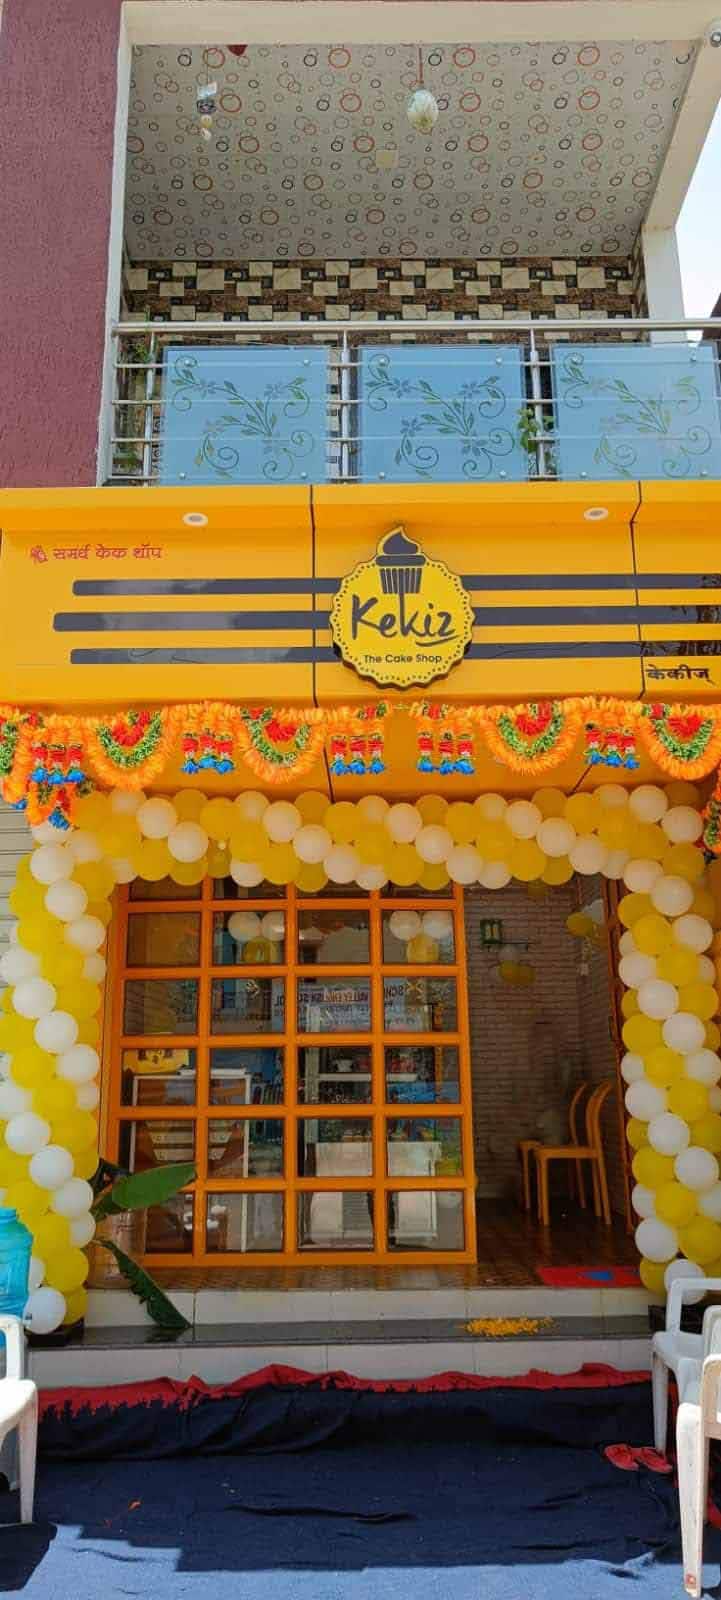 Merak Cake Shop Franchise In India | Call 9167017078